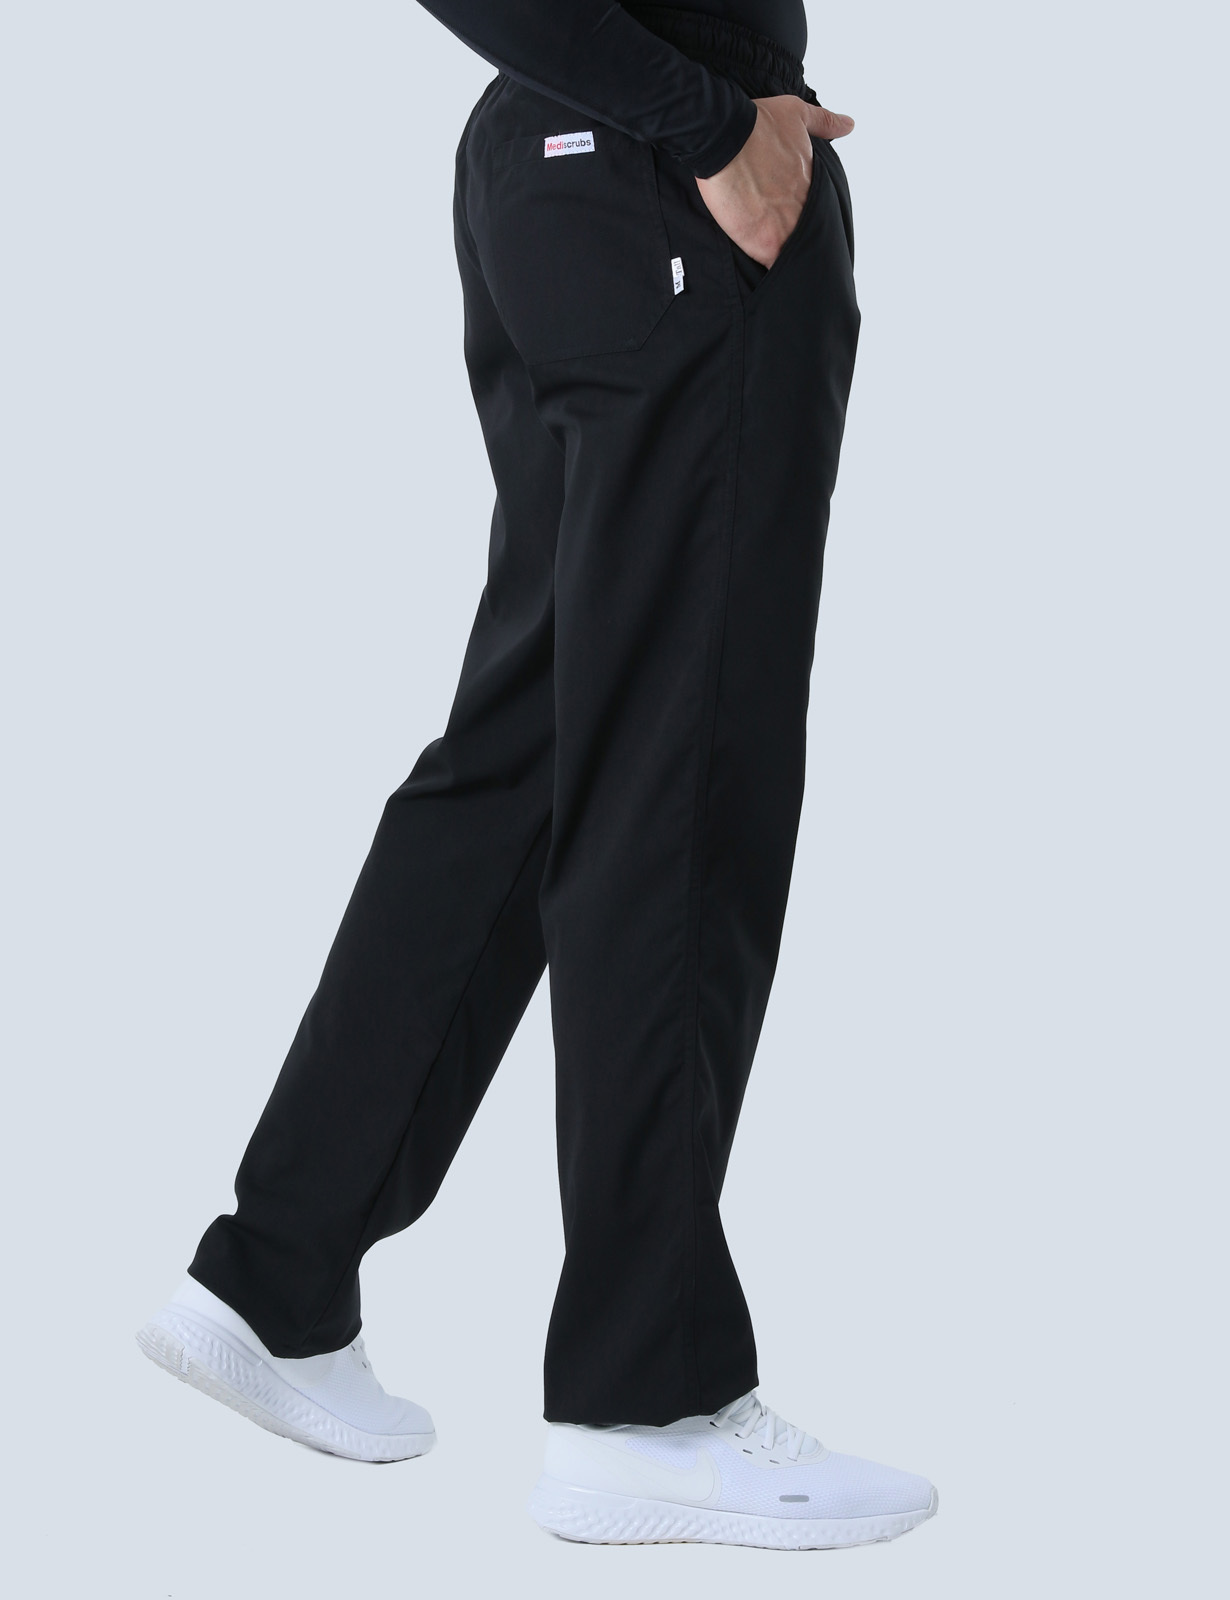 Men's Regular Cut Pants - Black - 3X Large